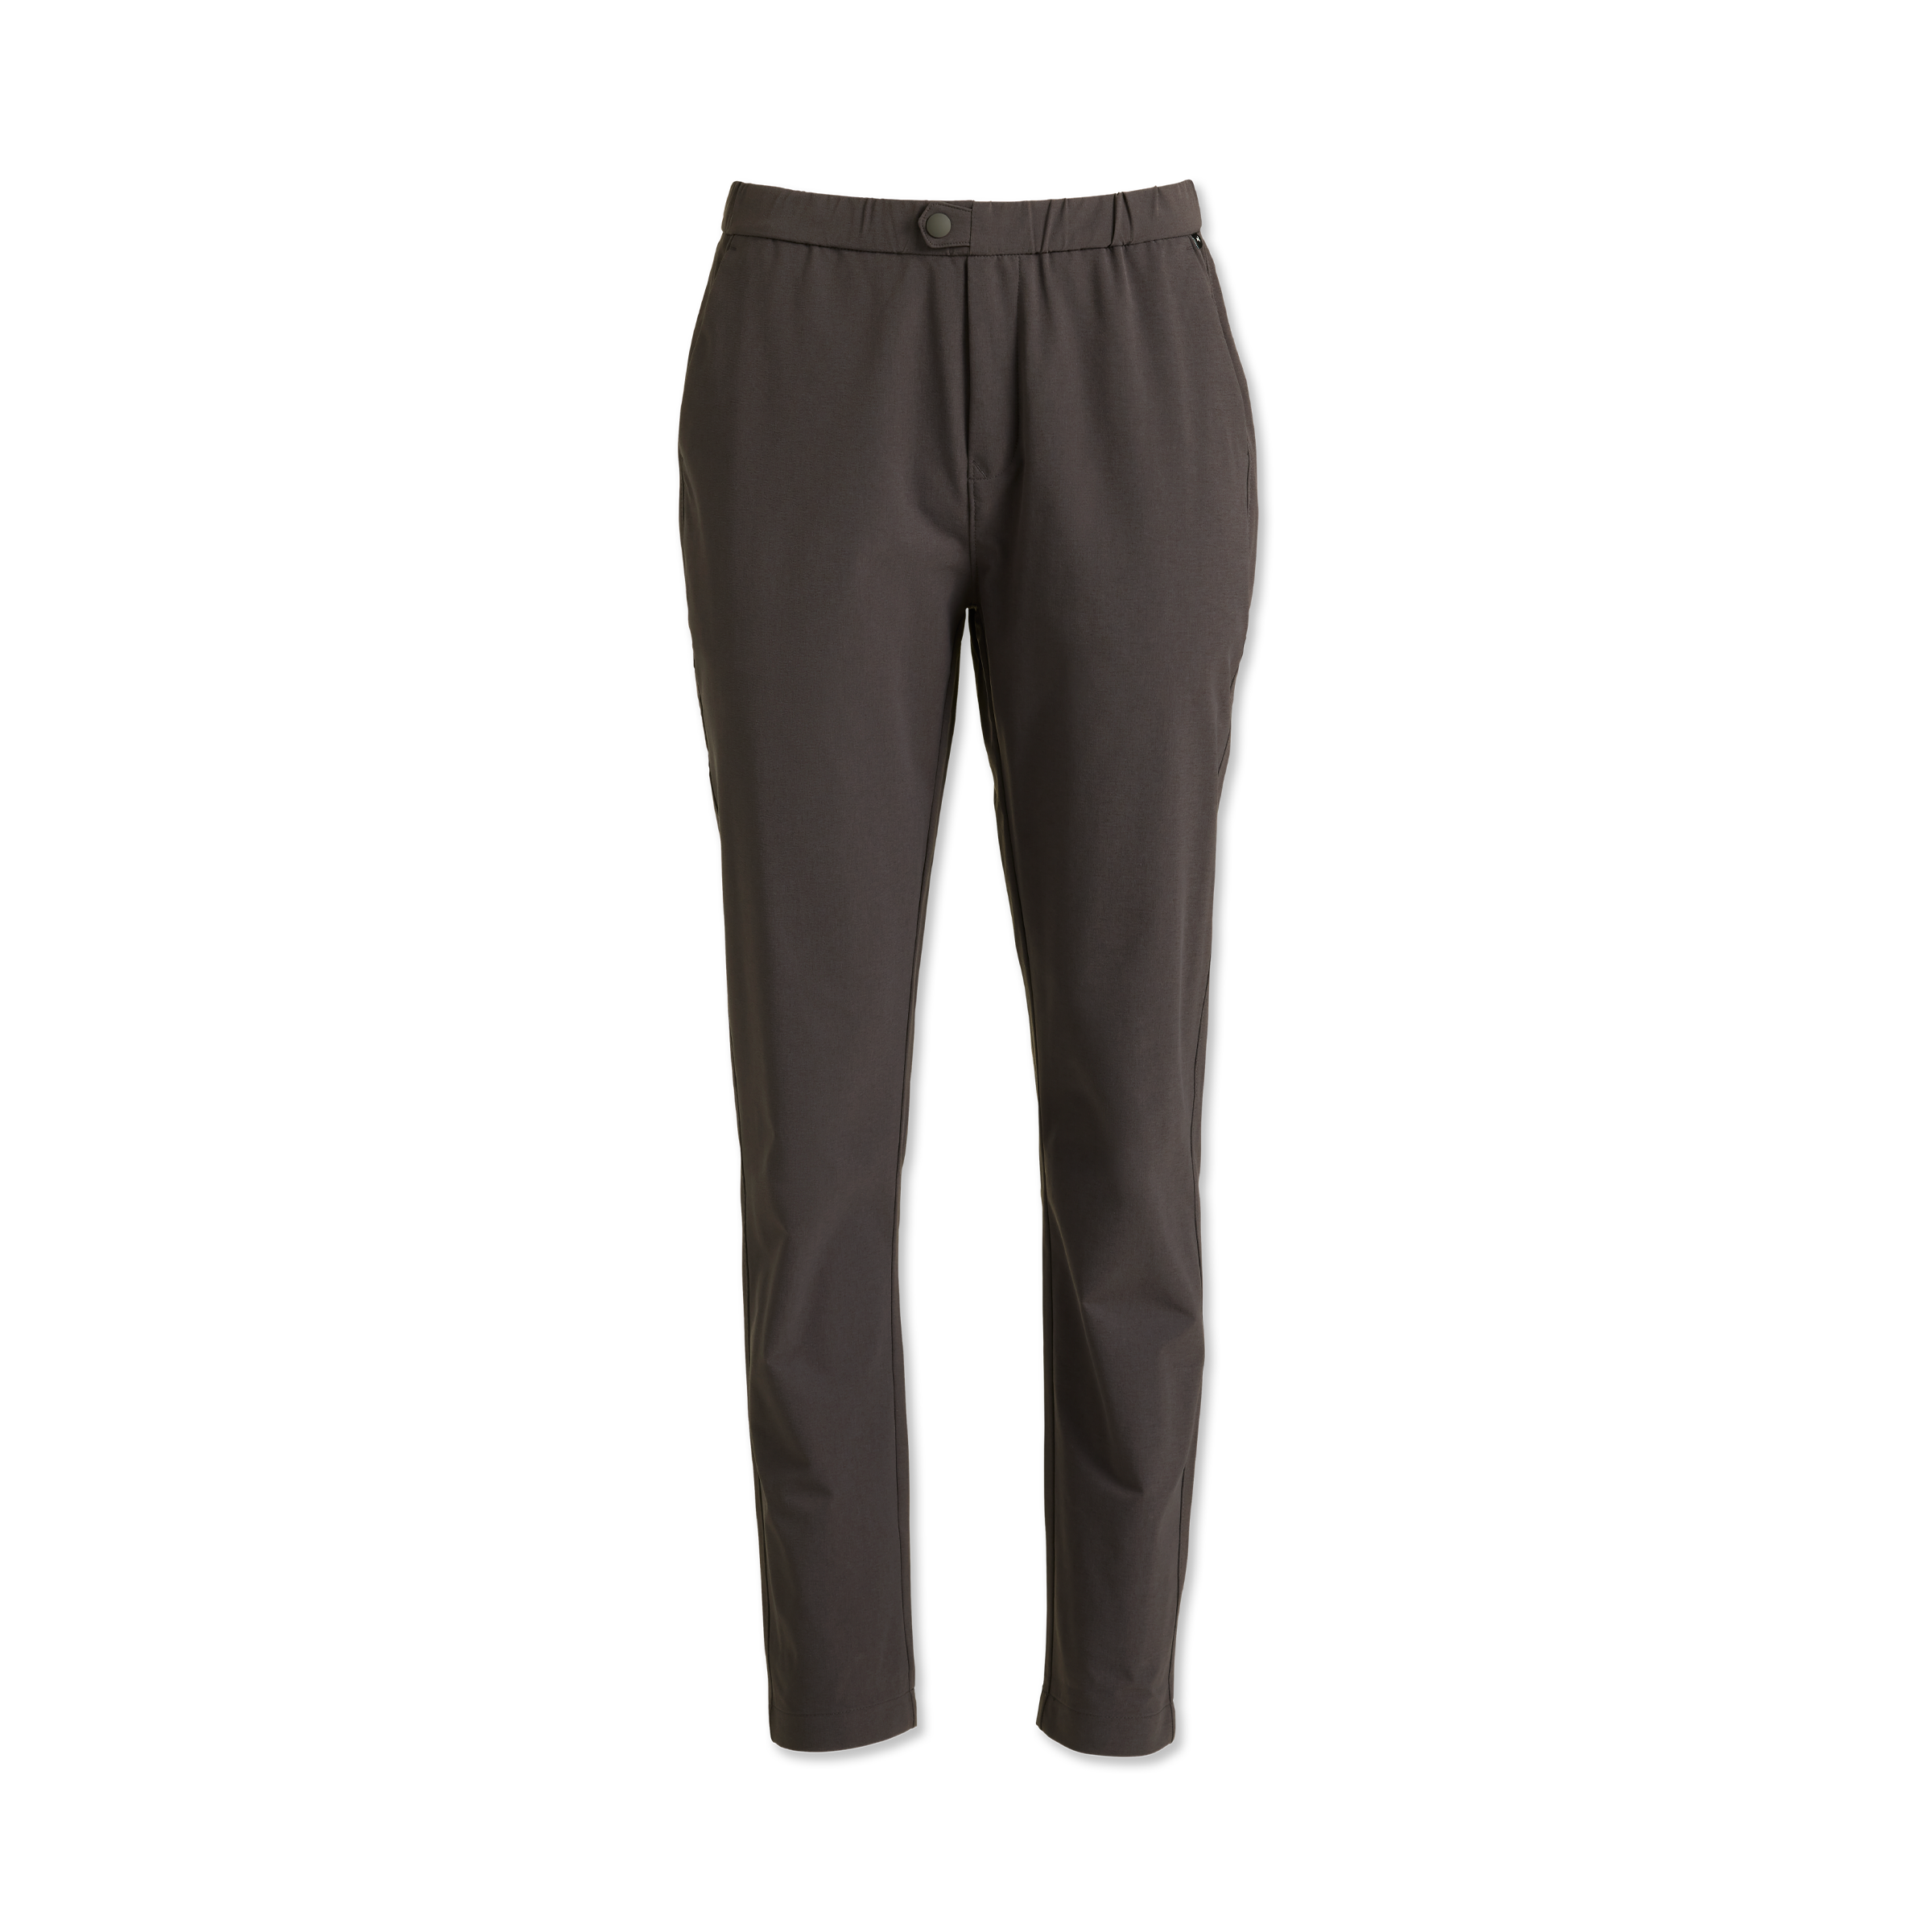 High-waist Dress Pants - Dark gray/pinstriped - Ladies | H&M US